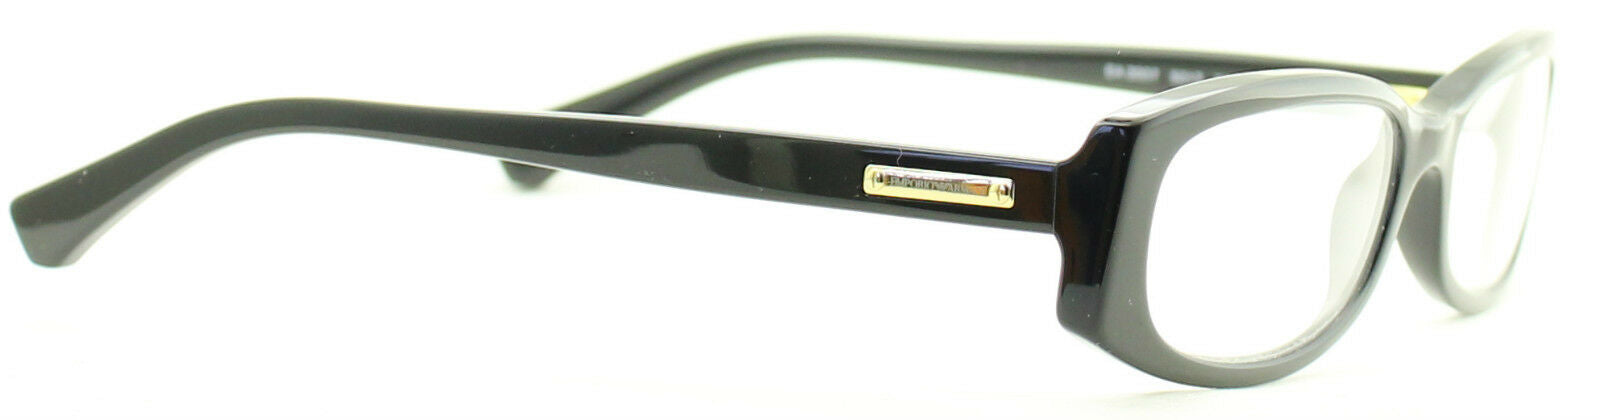 EMPORIO ARMANI EA3007 5017 Eyewear FRAMES RX Optical Glasses Eyeglasses-TRUSTED